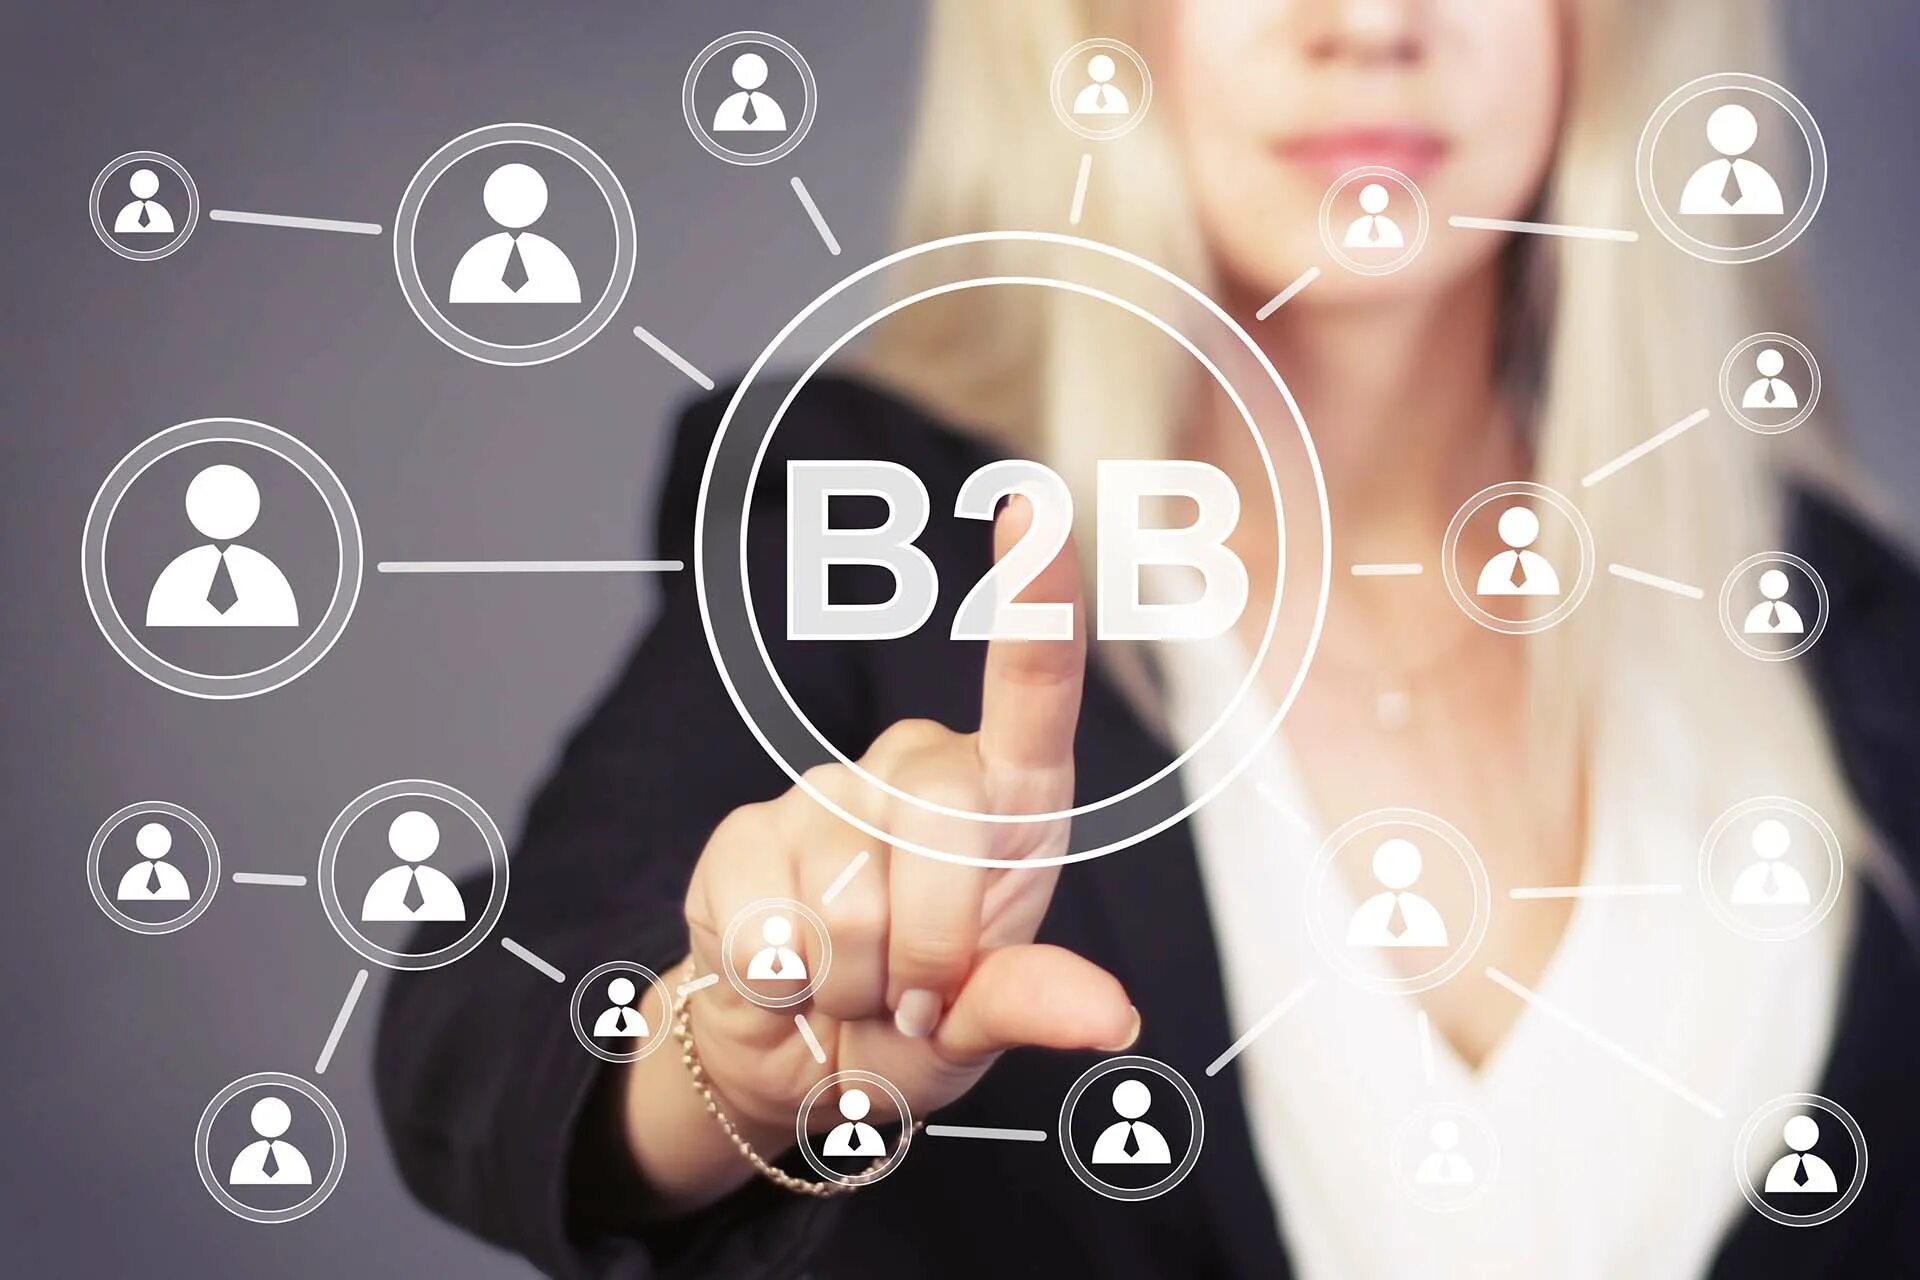 Https bi com. Бизнес для бизнеса b2b. B2b что это. B2b картинка. B2b маркетинг.